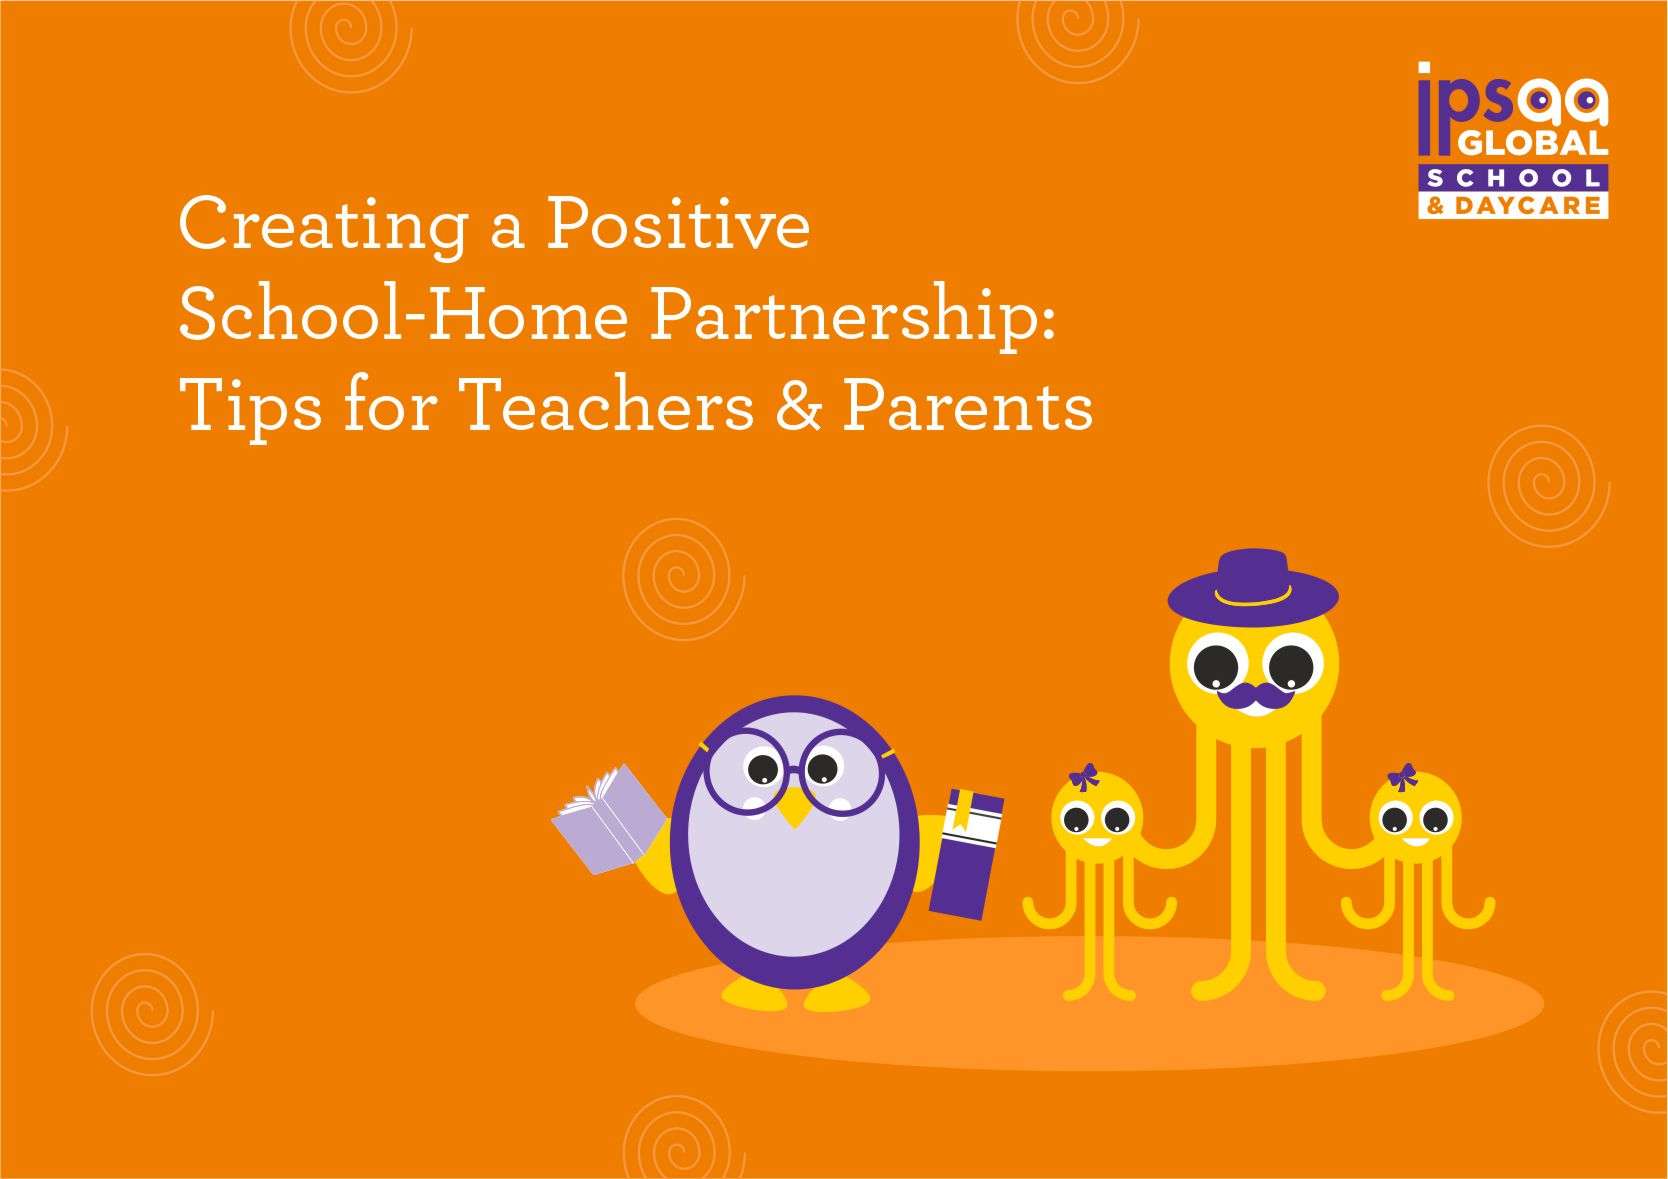 Tips for Teachers & Parents